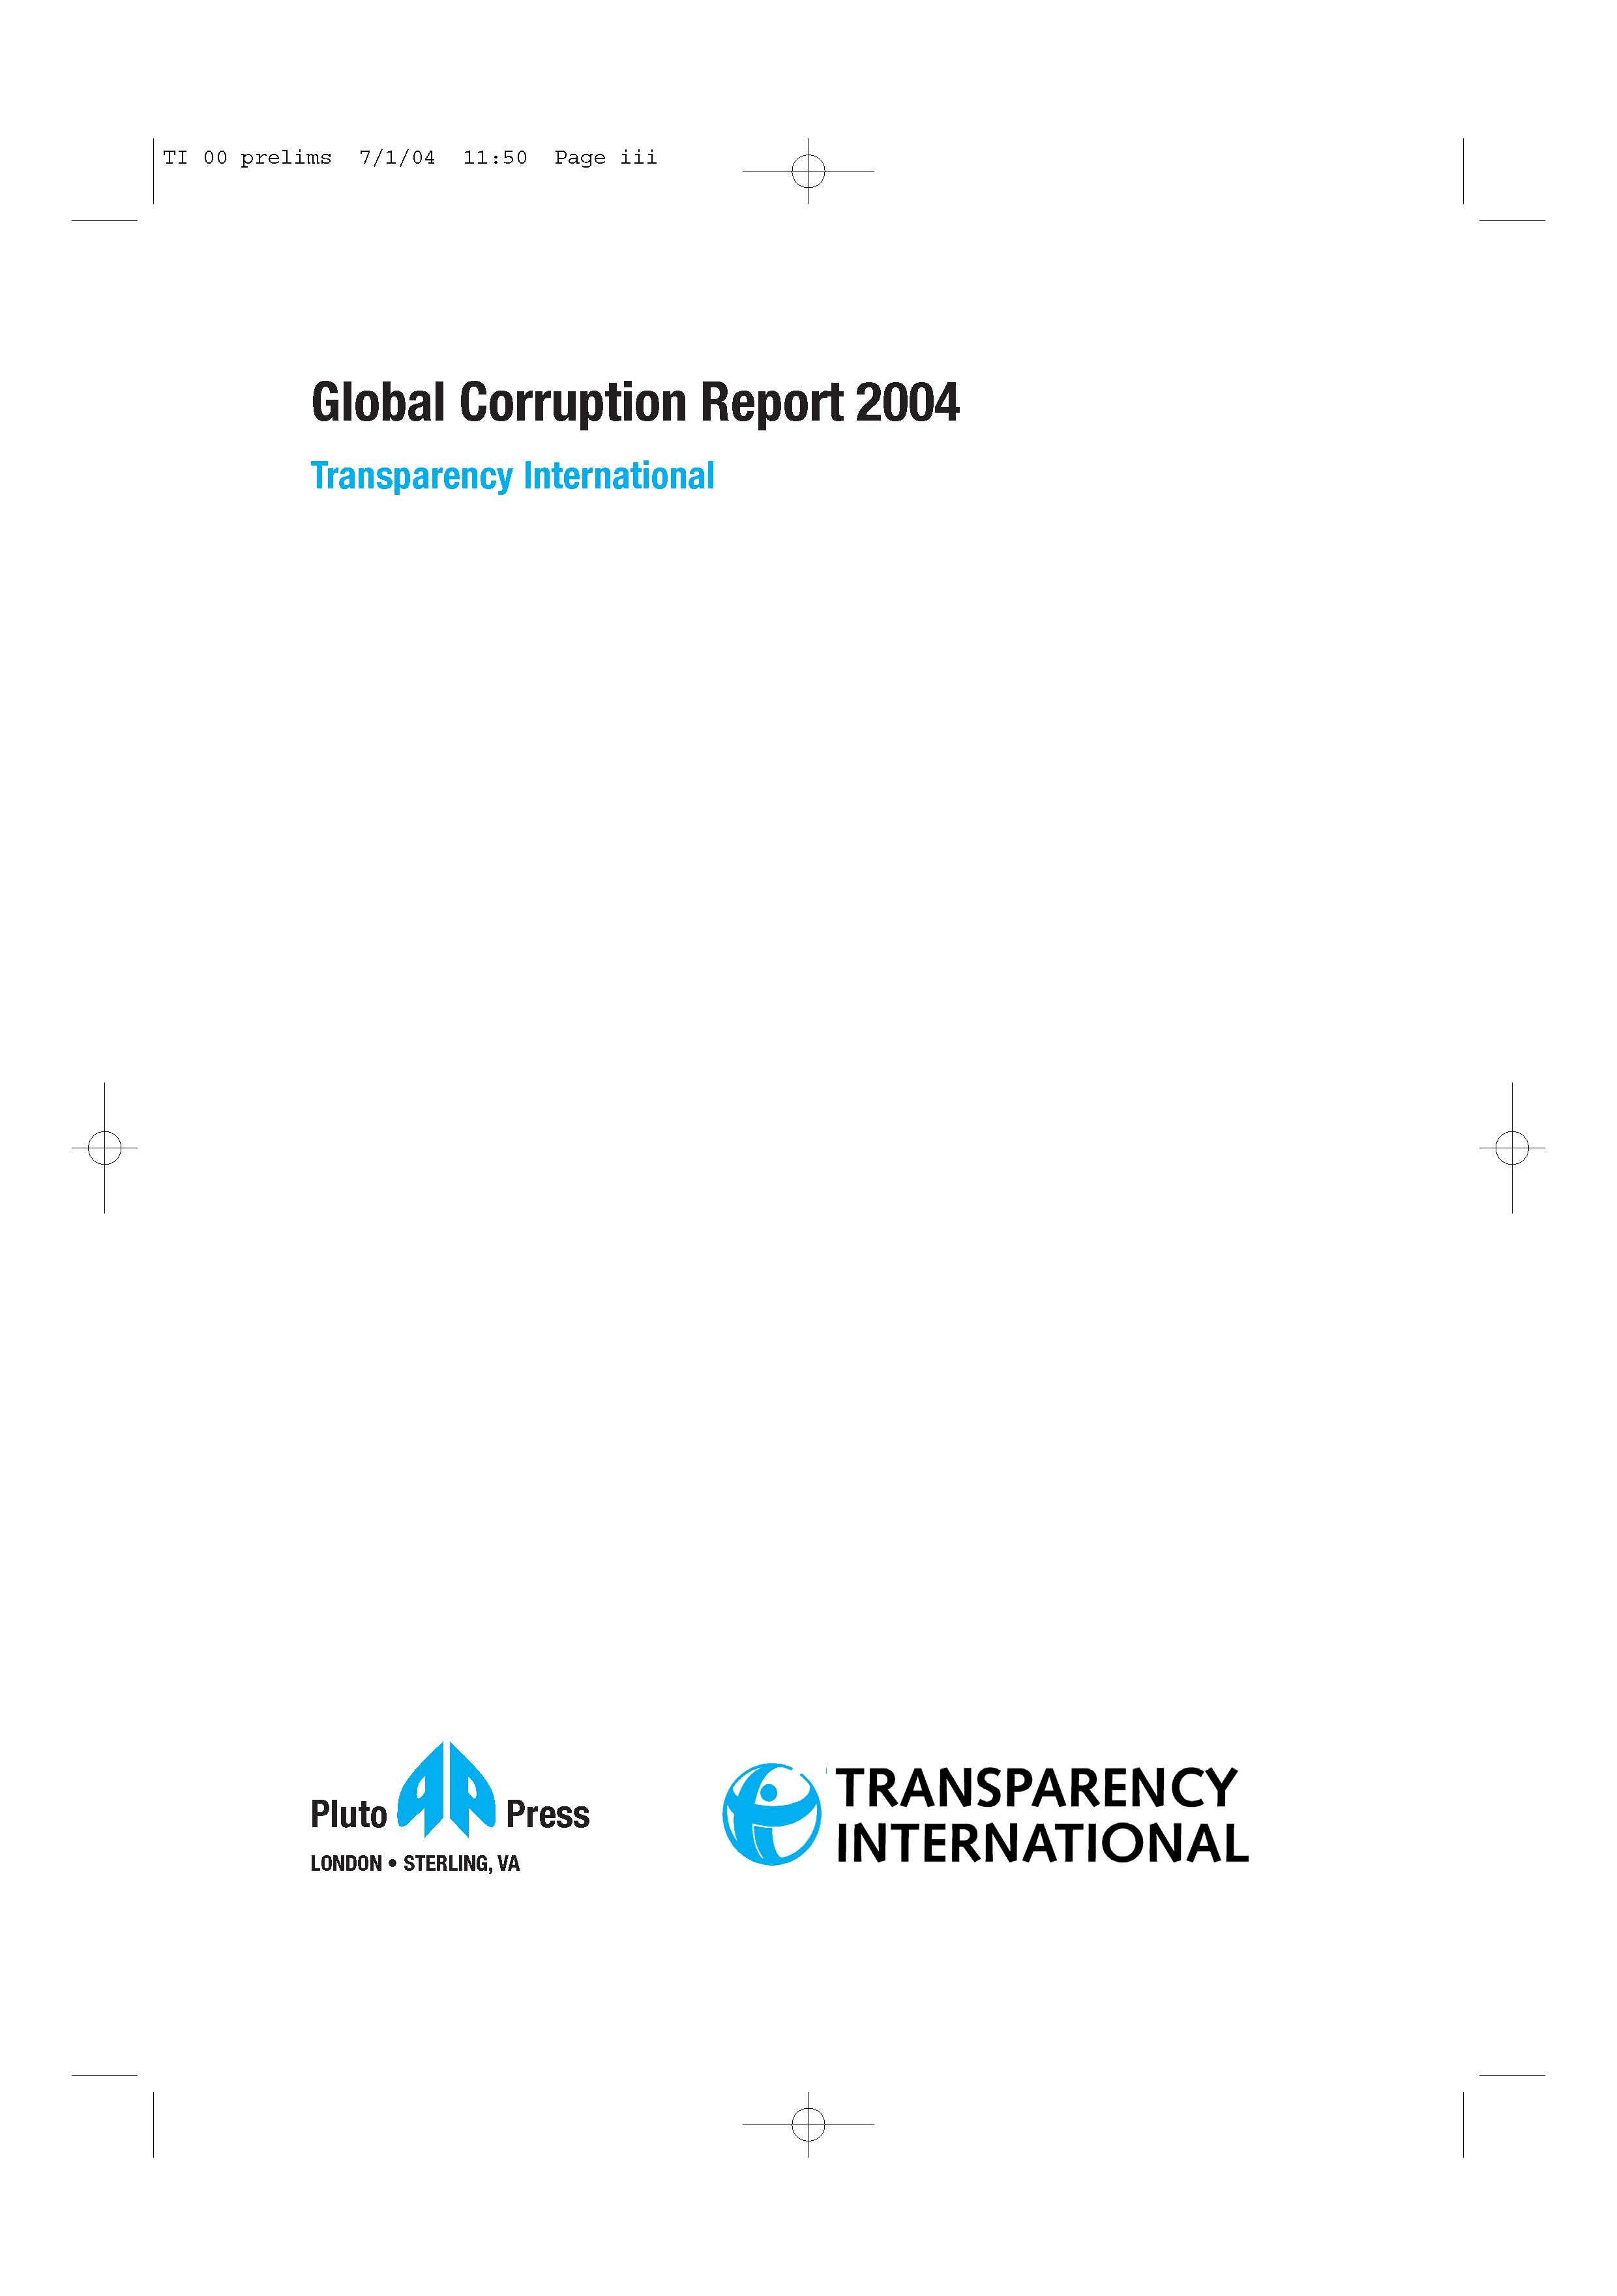 Global Corruption Report 2004. Transparency International